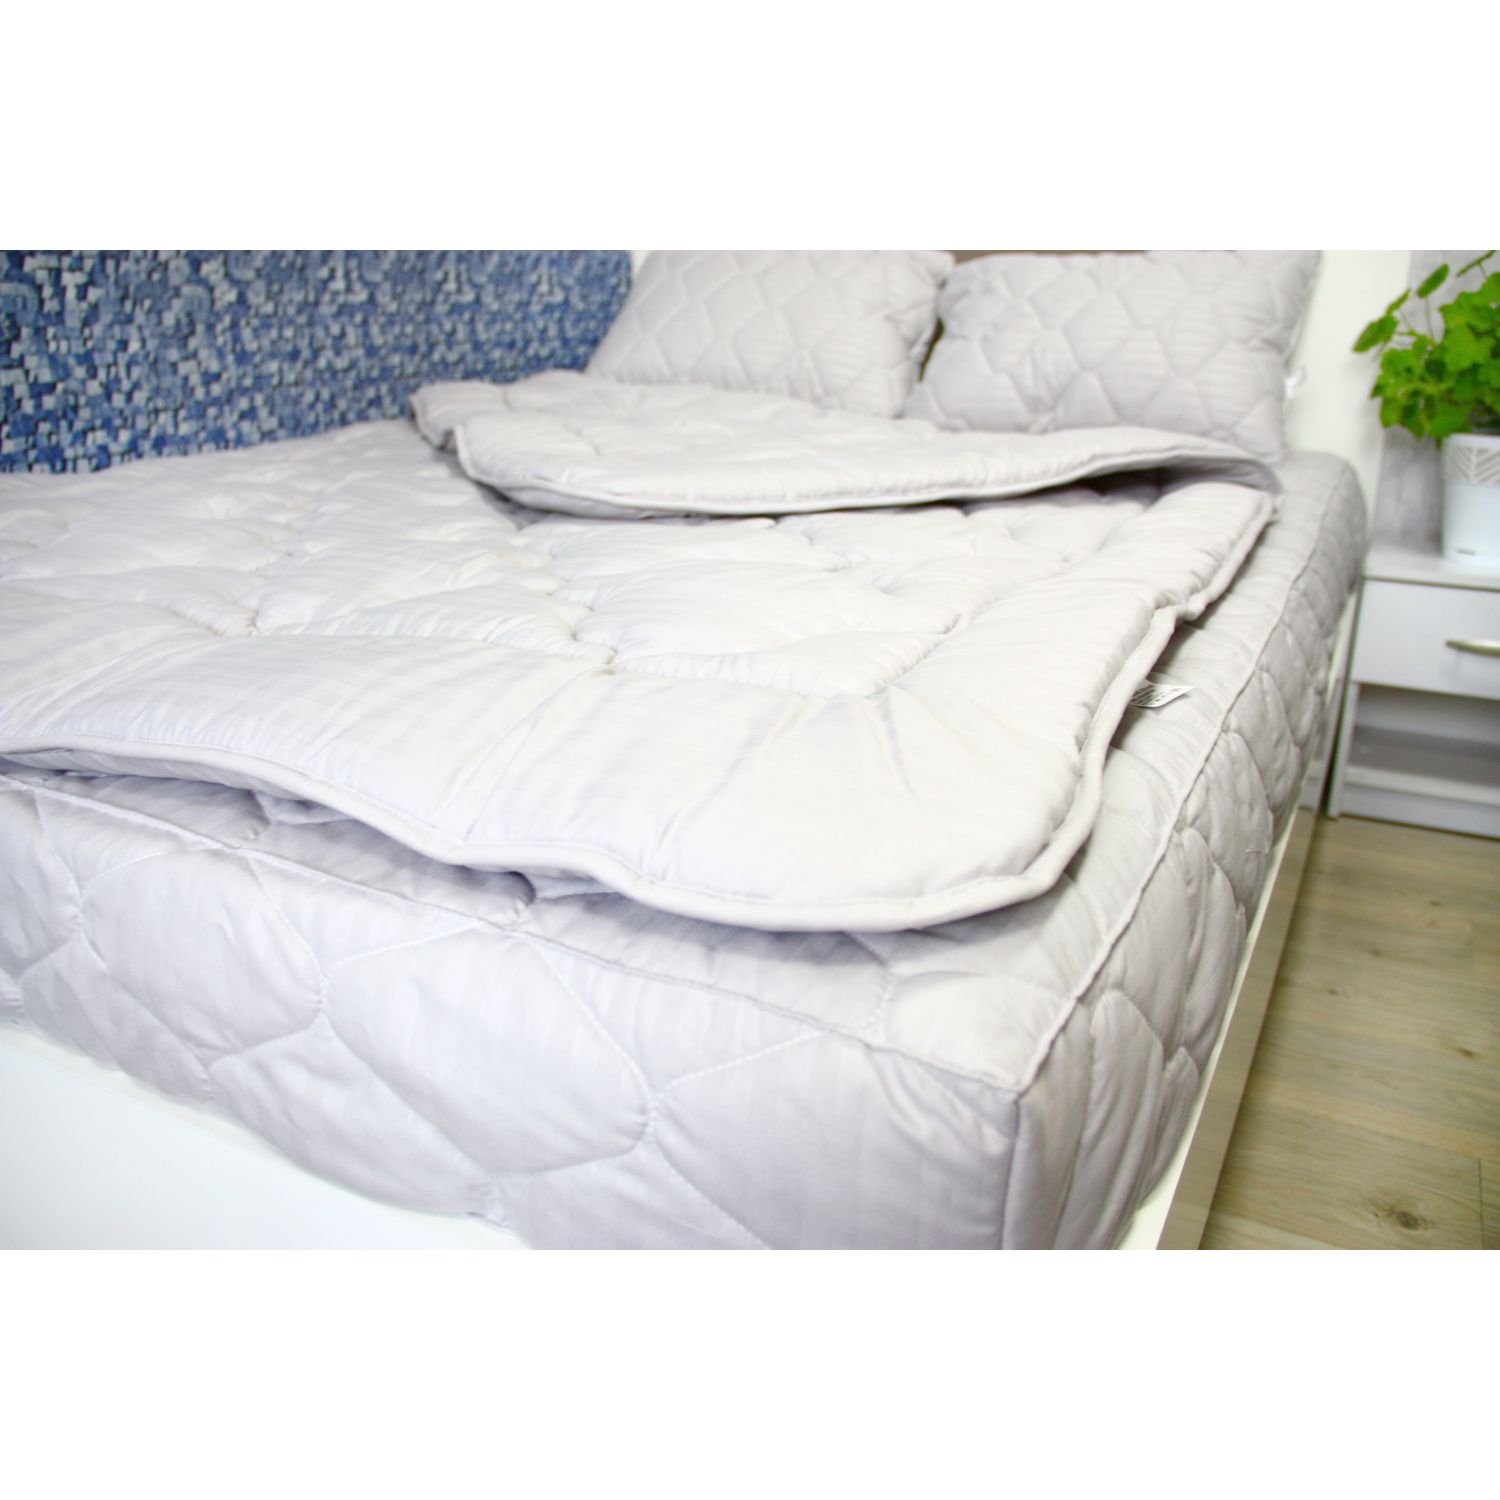 Одеяло LightHouse Soft Line Mf Stripe grey, 155х215 см, серое (602251) - фото 3